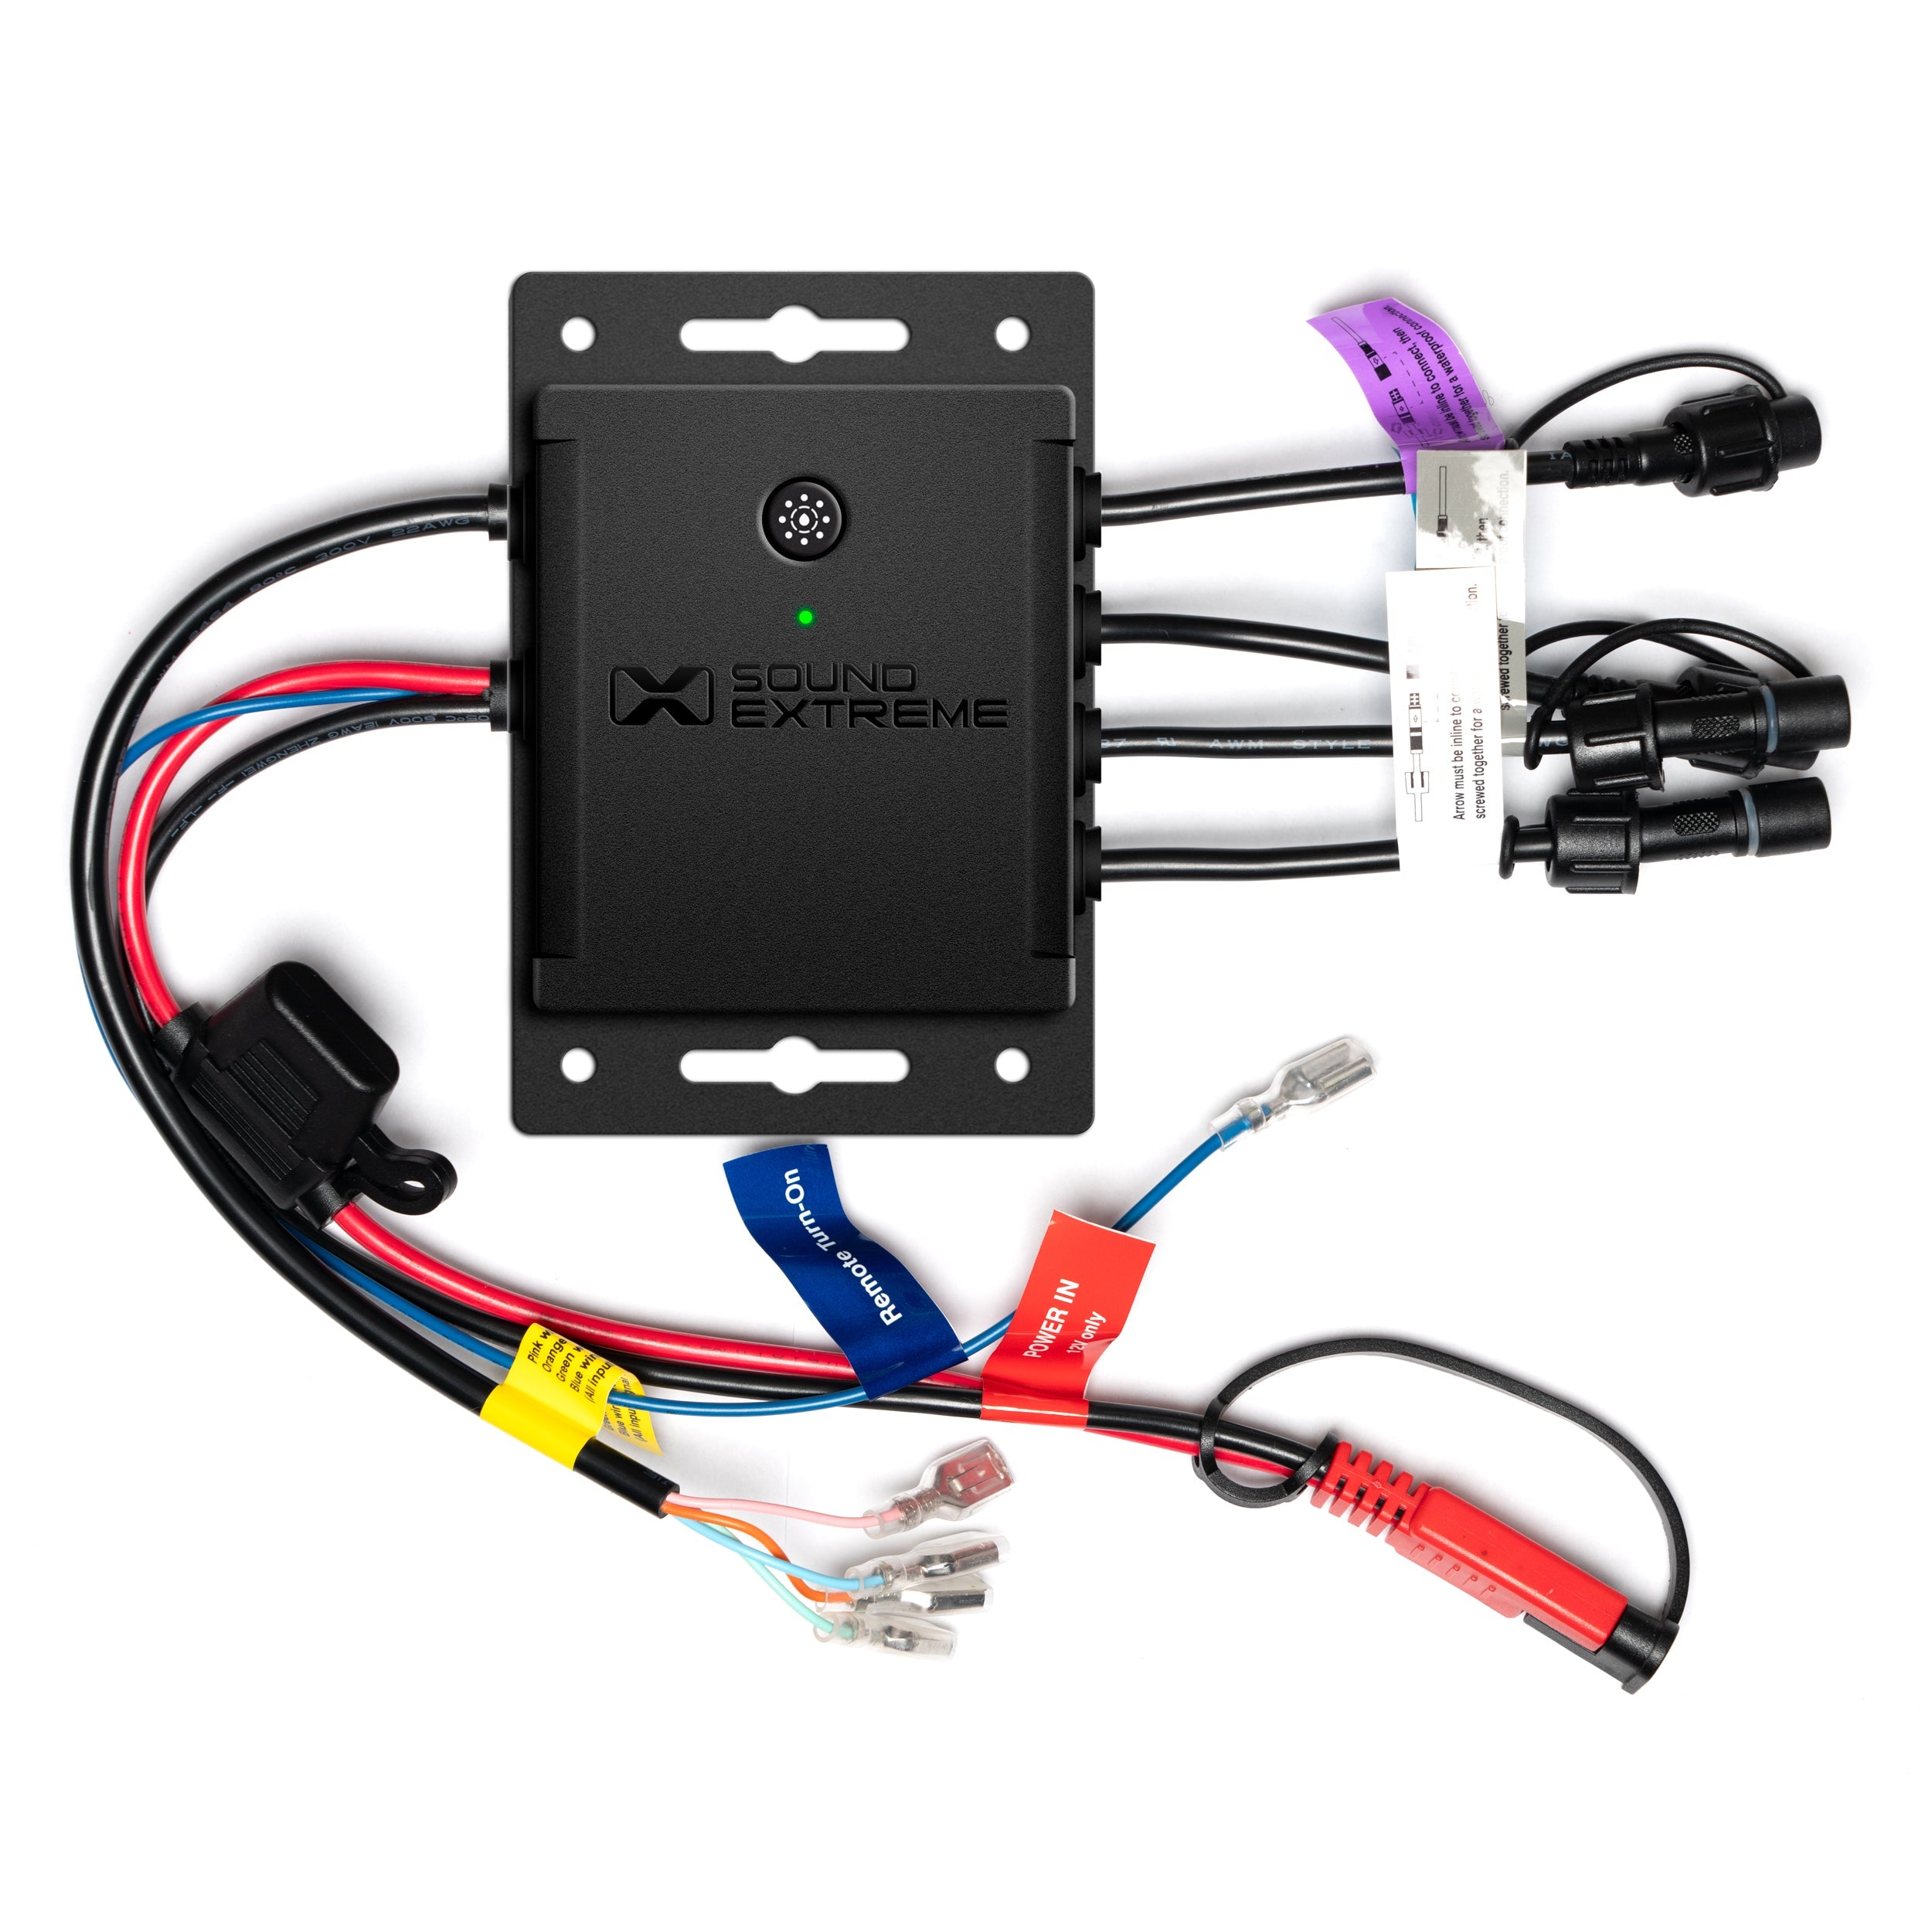 Extreme Whip Kit Qty 2 x 4 ft plus LEDCast Controller - SoundExtreme